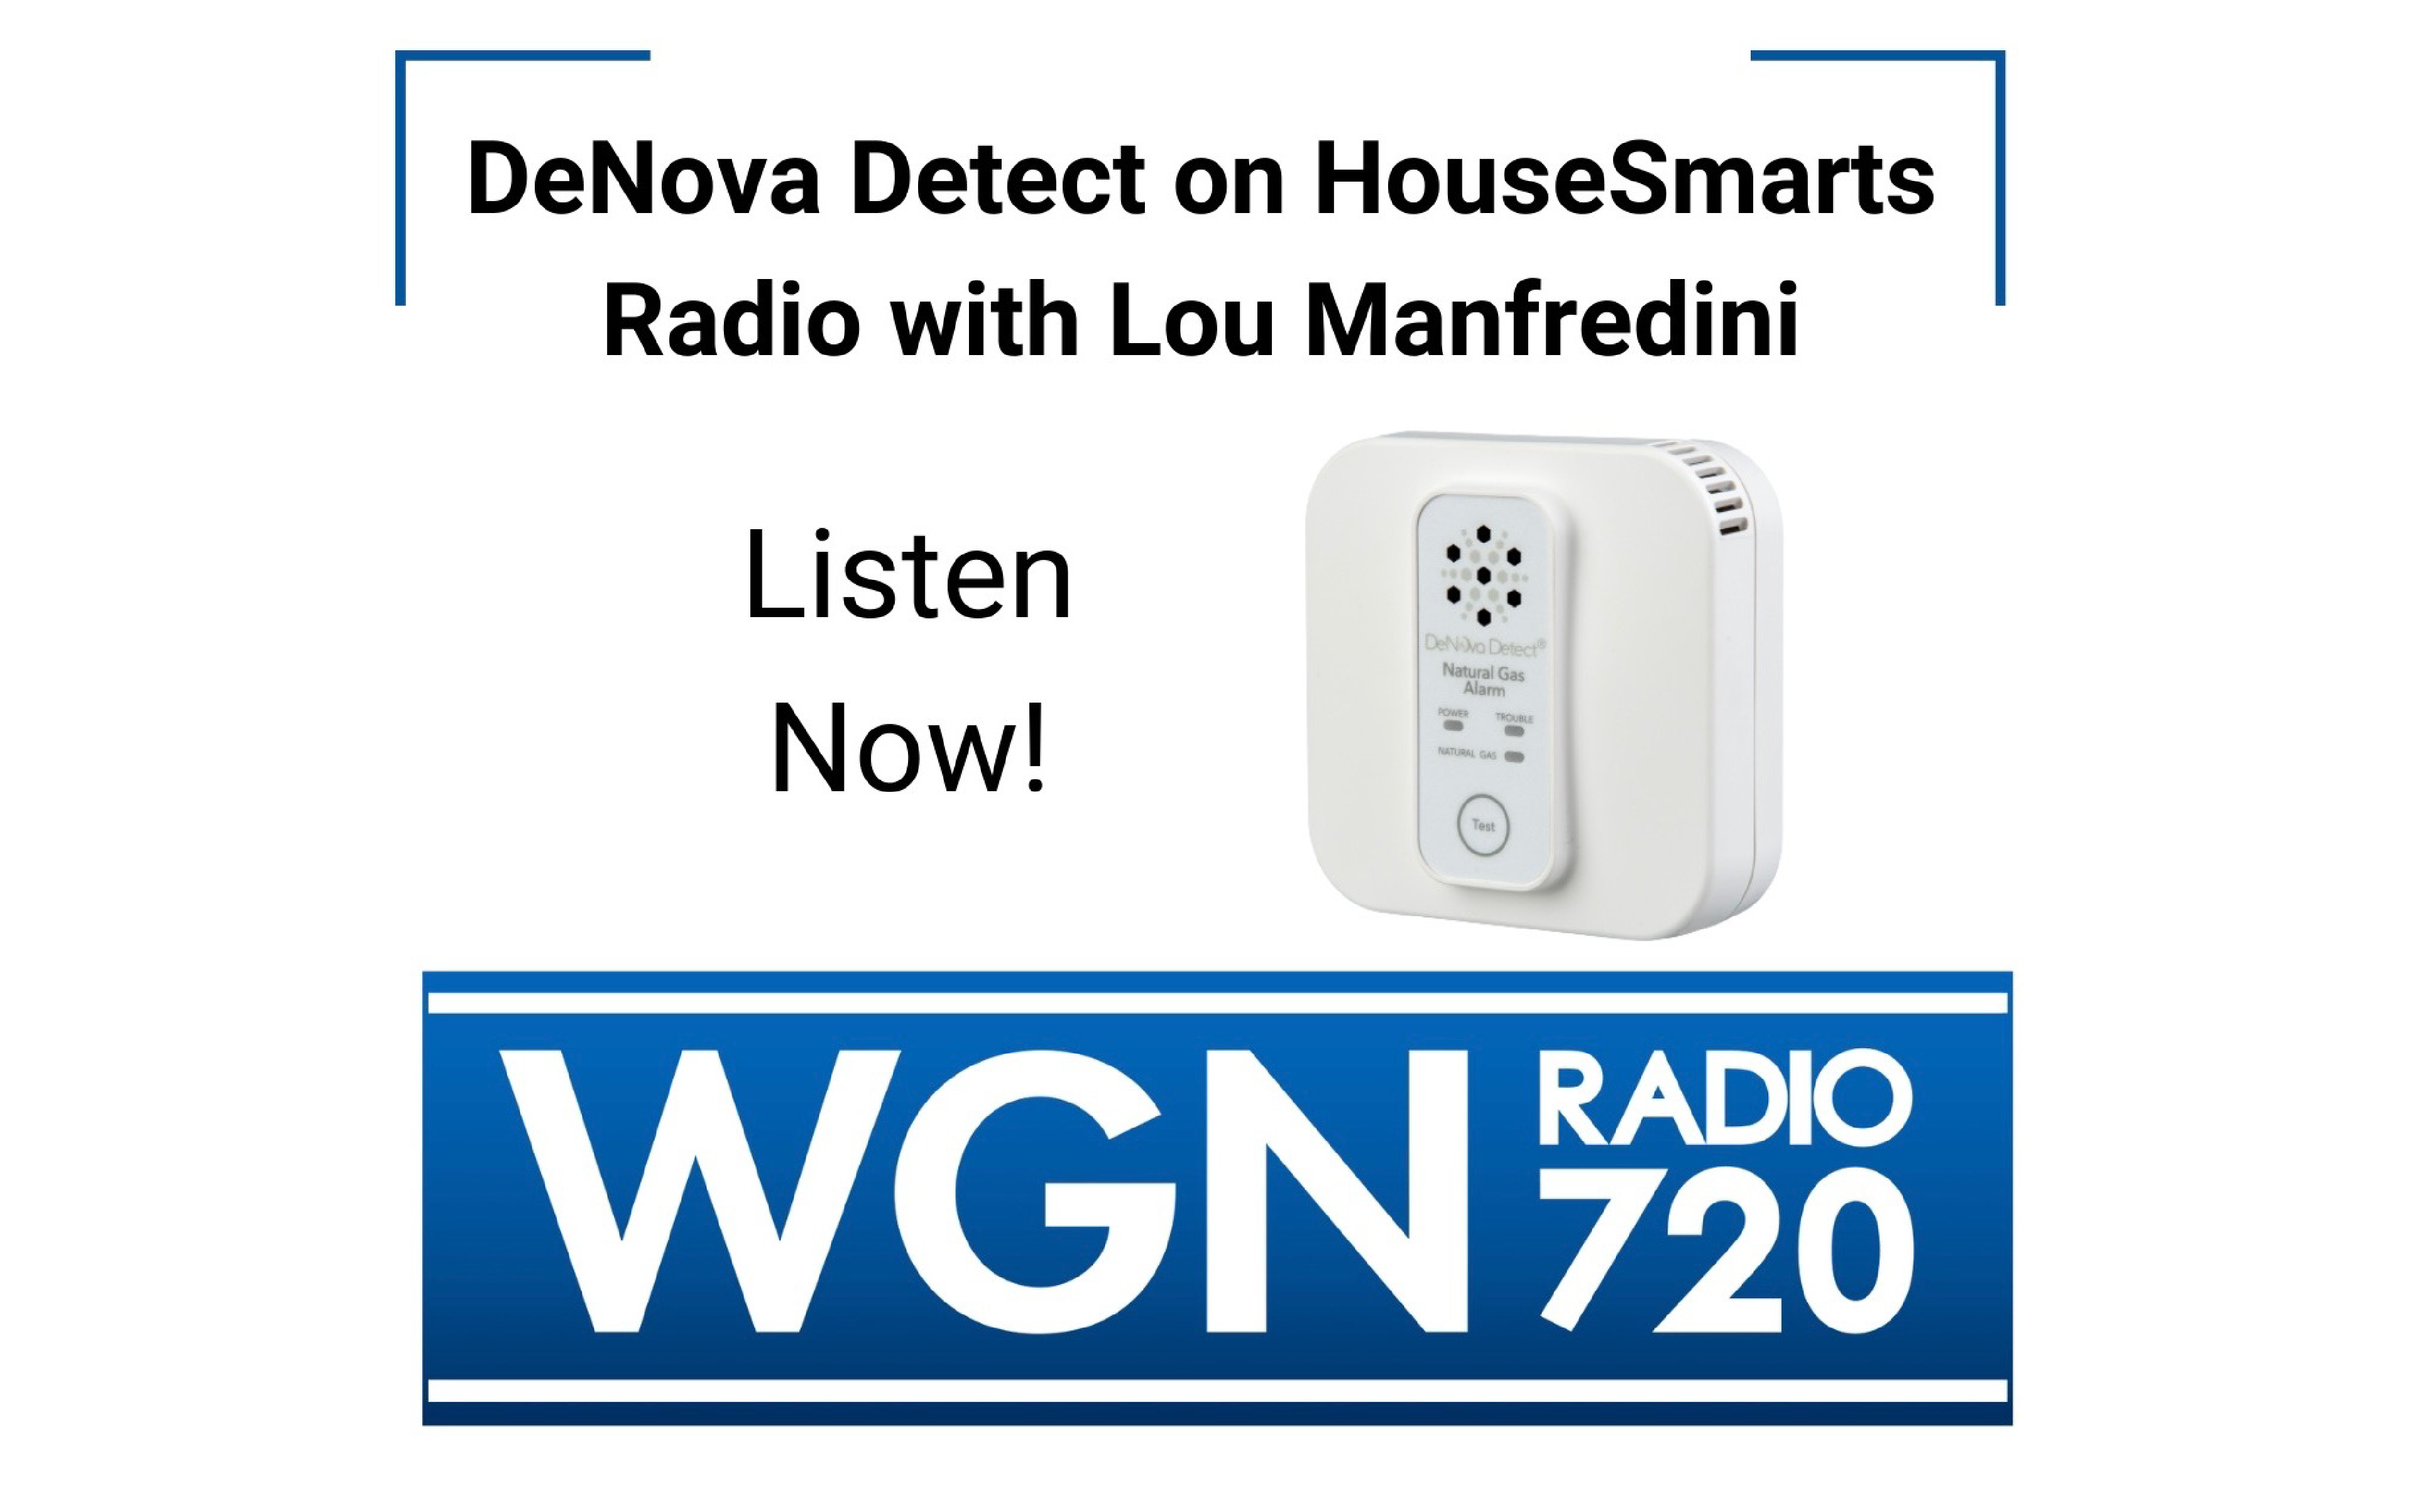 DeNova Detect on HouseSmarts Radio with Lou Manfredini